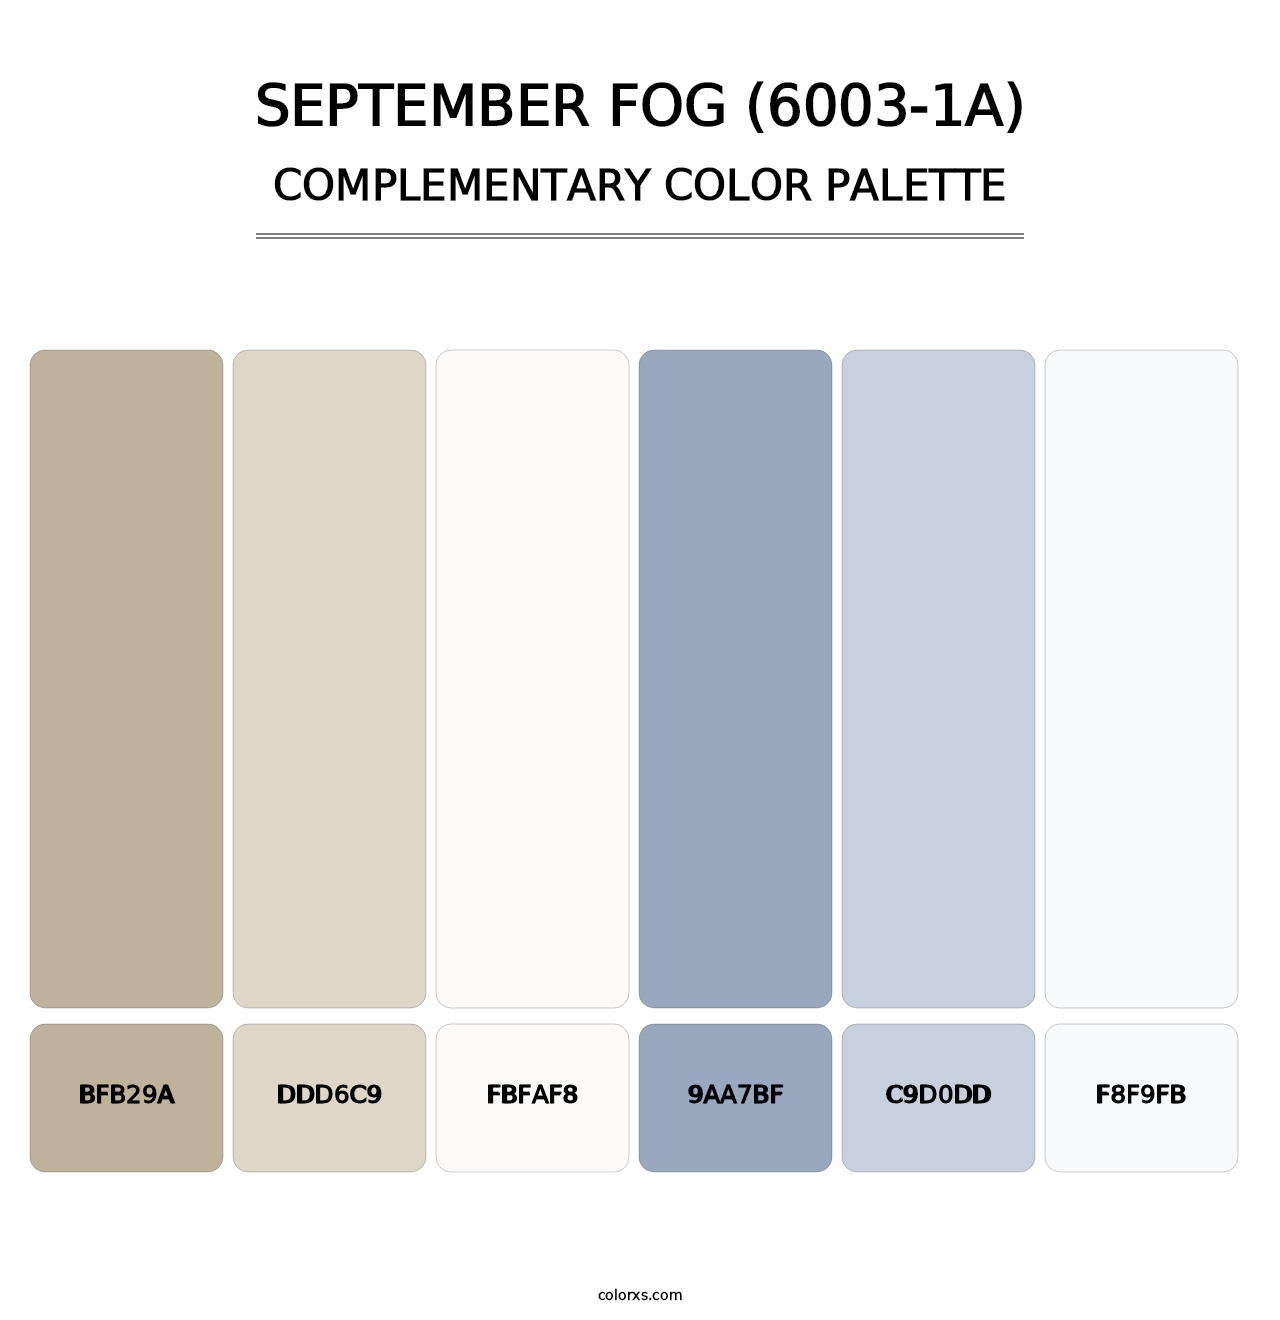 September Fog (6003-1A) - Complementary Color Palette